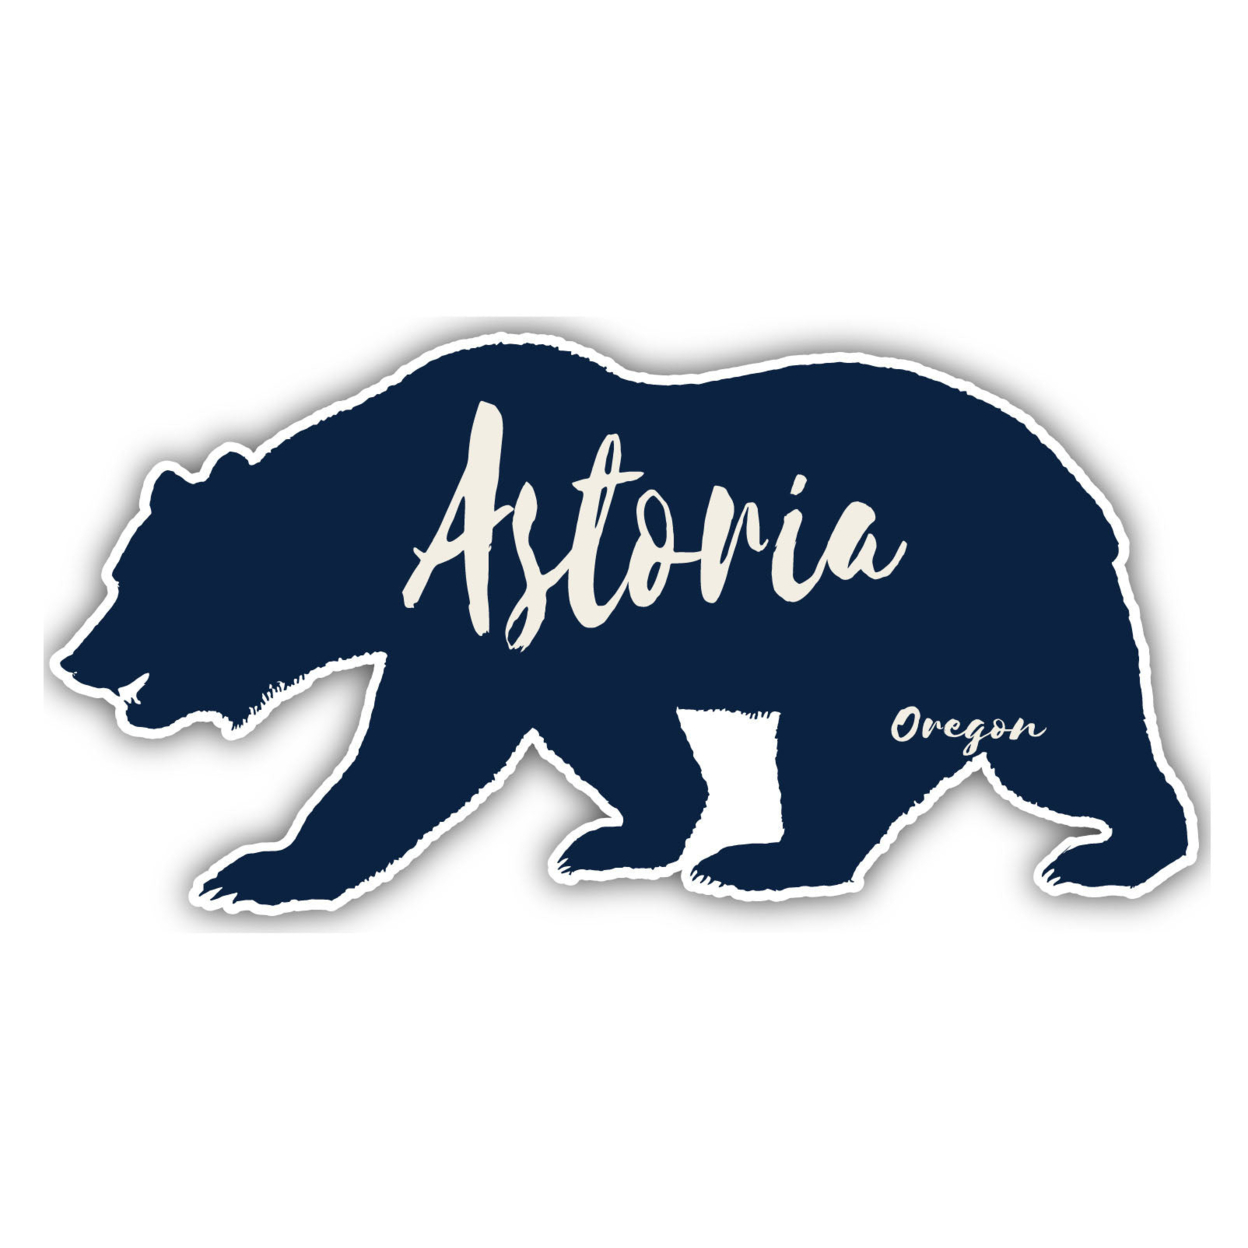 Astoria Oregon Souvenir Decorative Stickers (Choose Theme And Size) - 4-Pack, 8-Inch, Bear